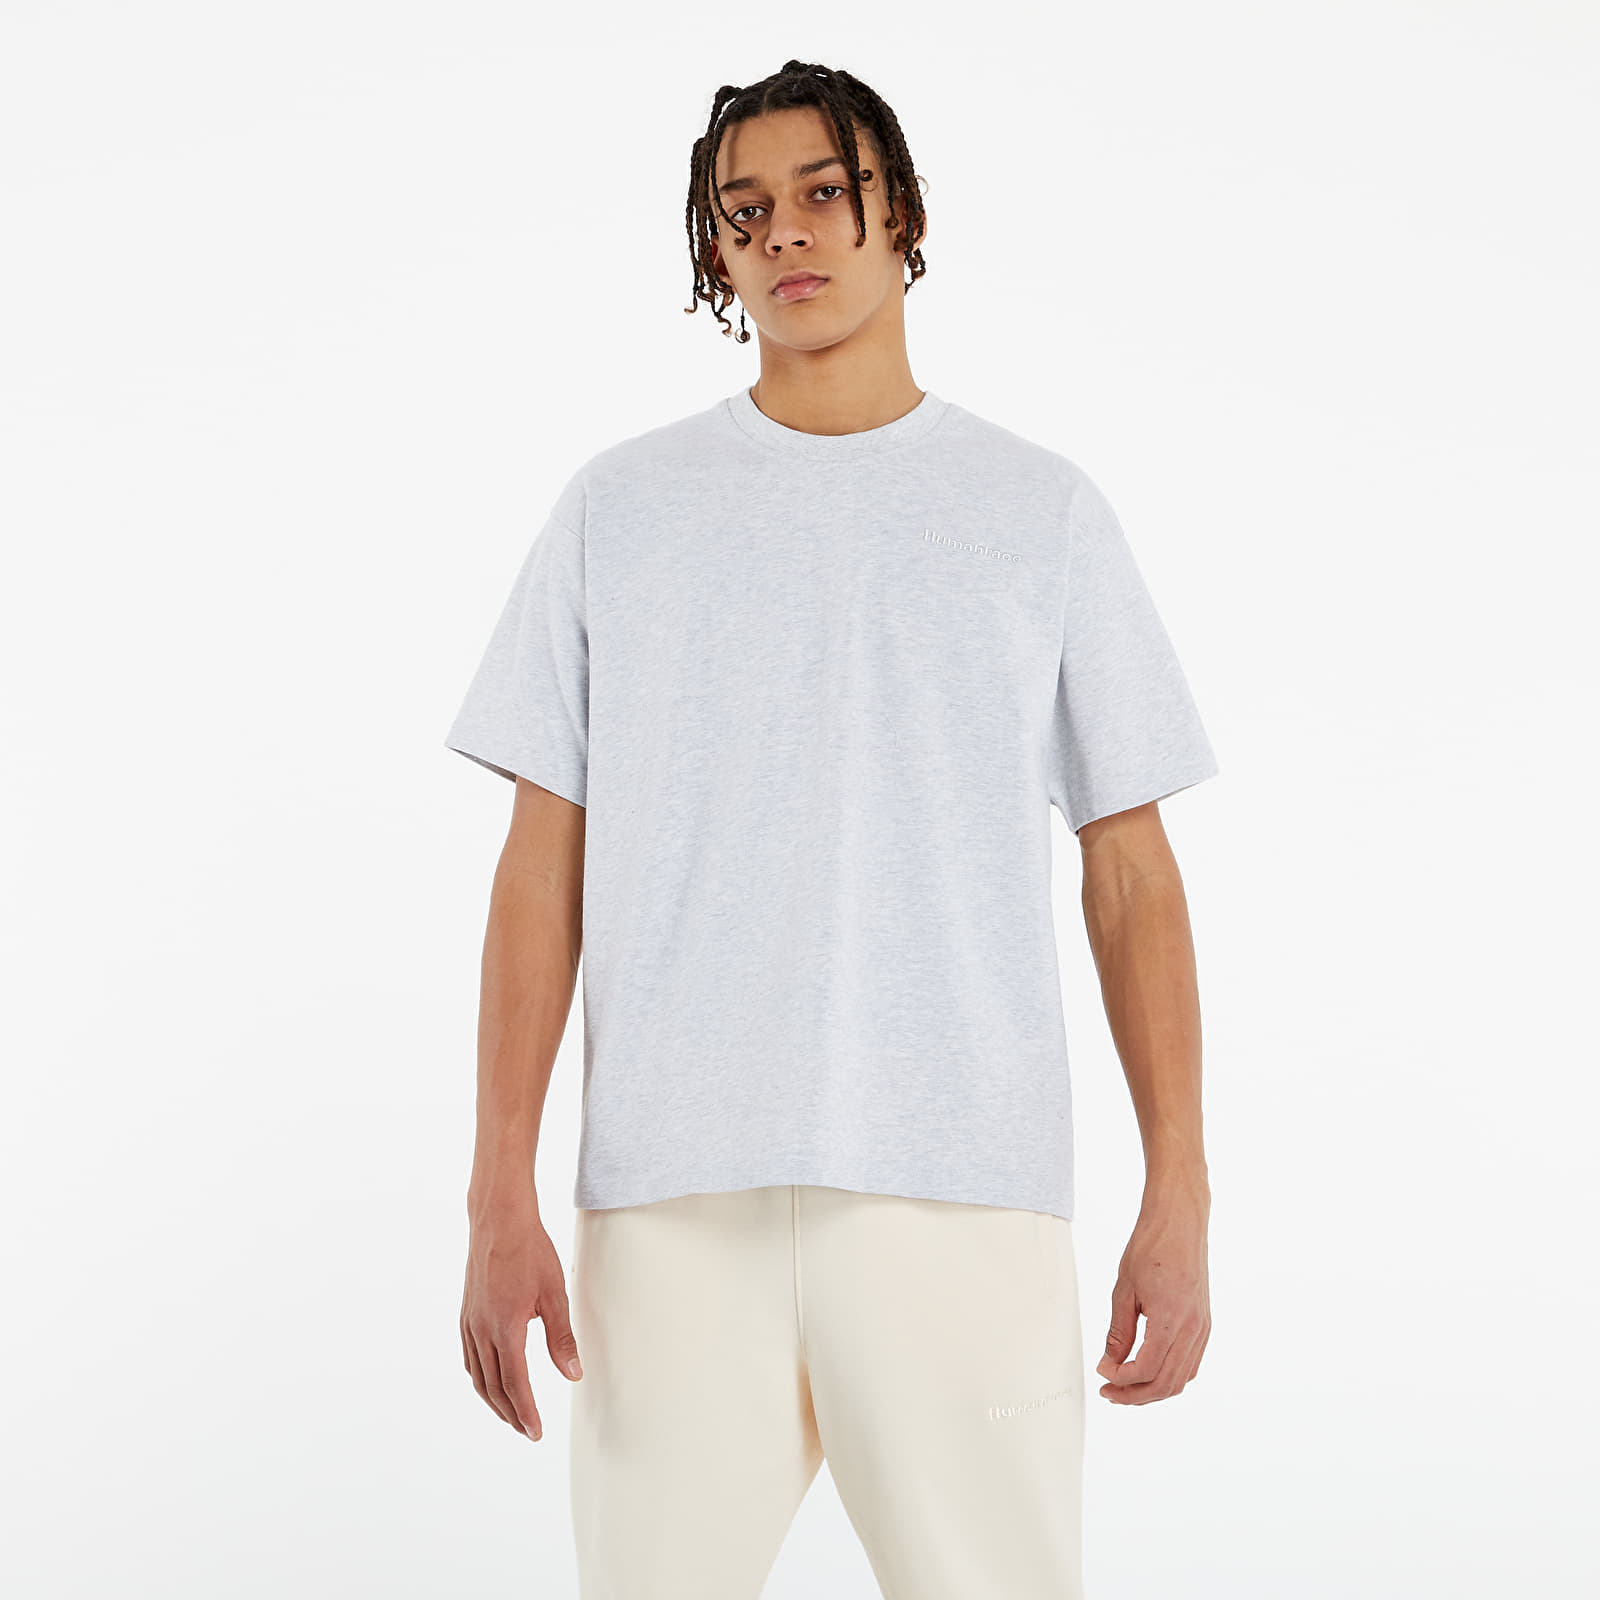 Тениски adidas x Pharrell Williams Basics Shirt Light Grey Heather 669196